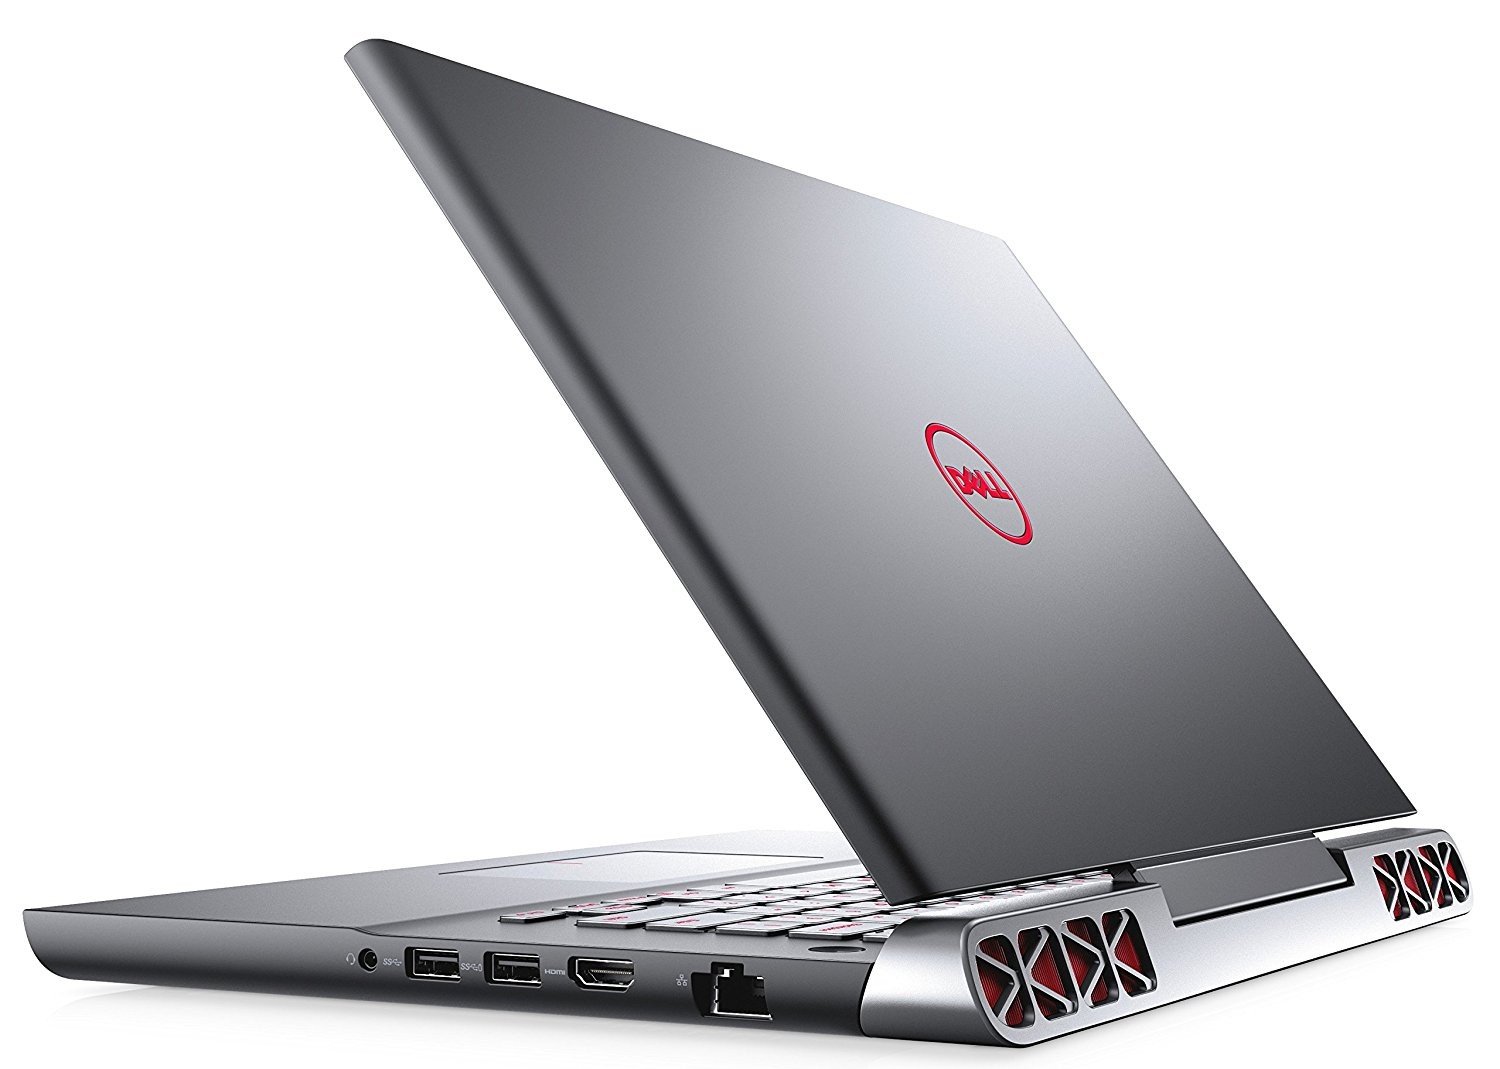 Kaufe Dell Inspiron 7000 15.6" Gaming Laptop (Intel Core i7-7700HQ